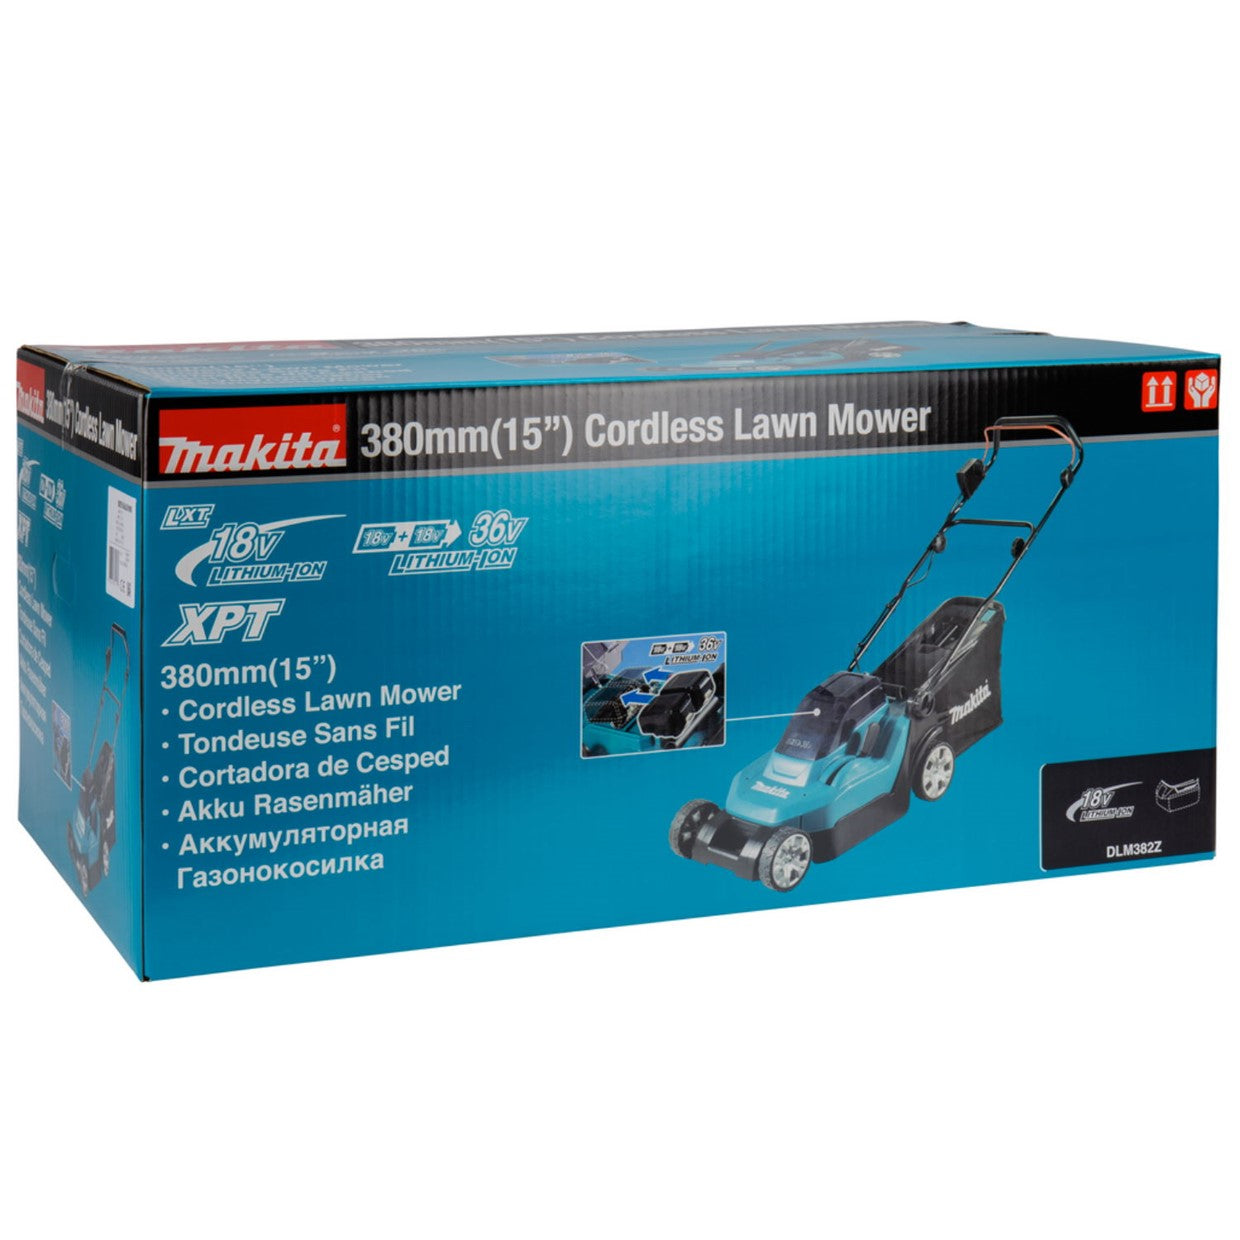 Makita 36v Cordless Lawn Mower ( 18v+18v) DLM382Z Solo Power Tool Services